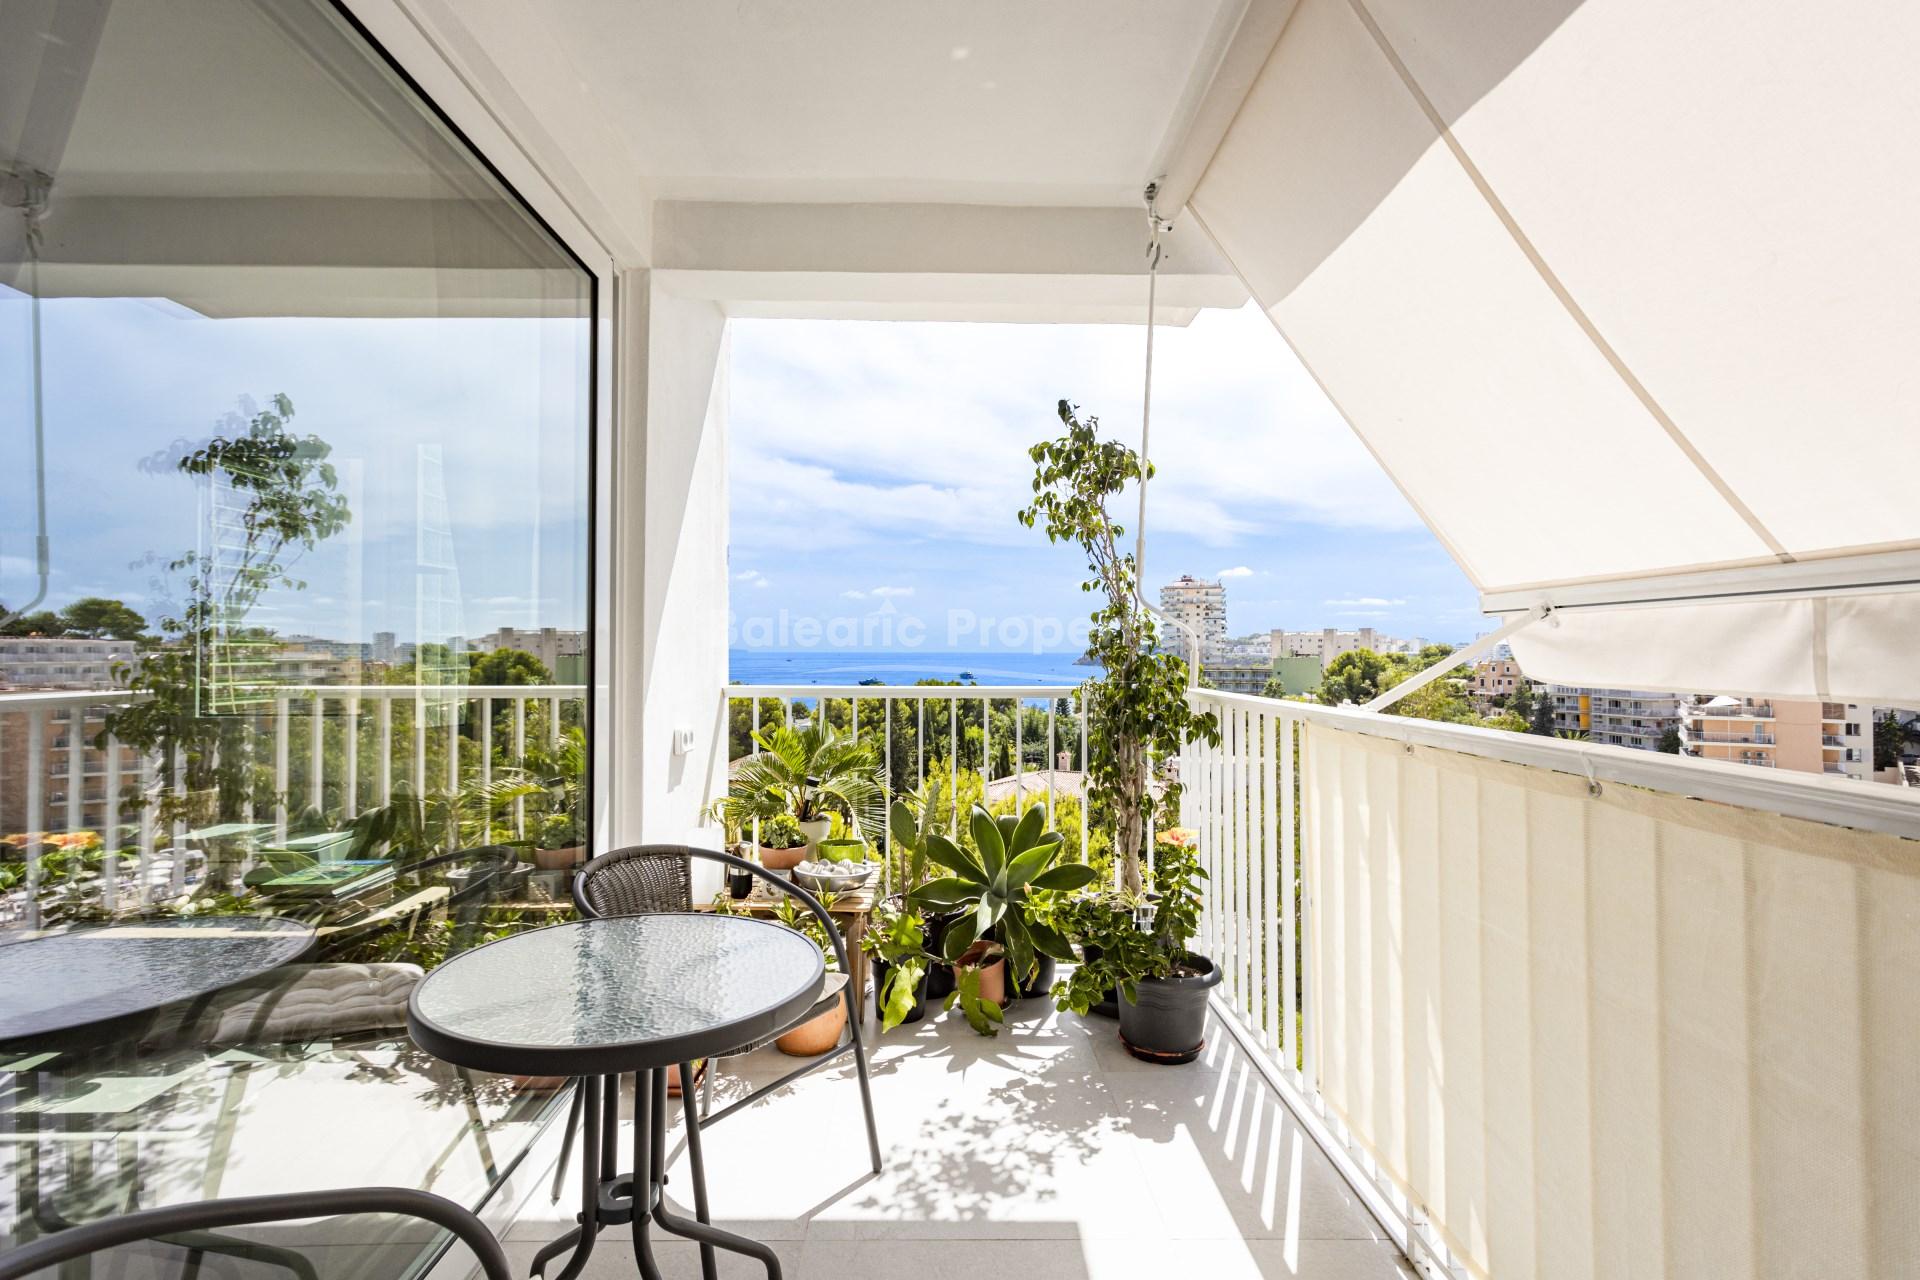 Apartment with sea views for sale close to the beach in Palmanova, Mallorca